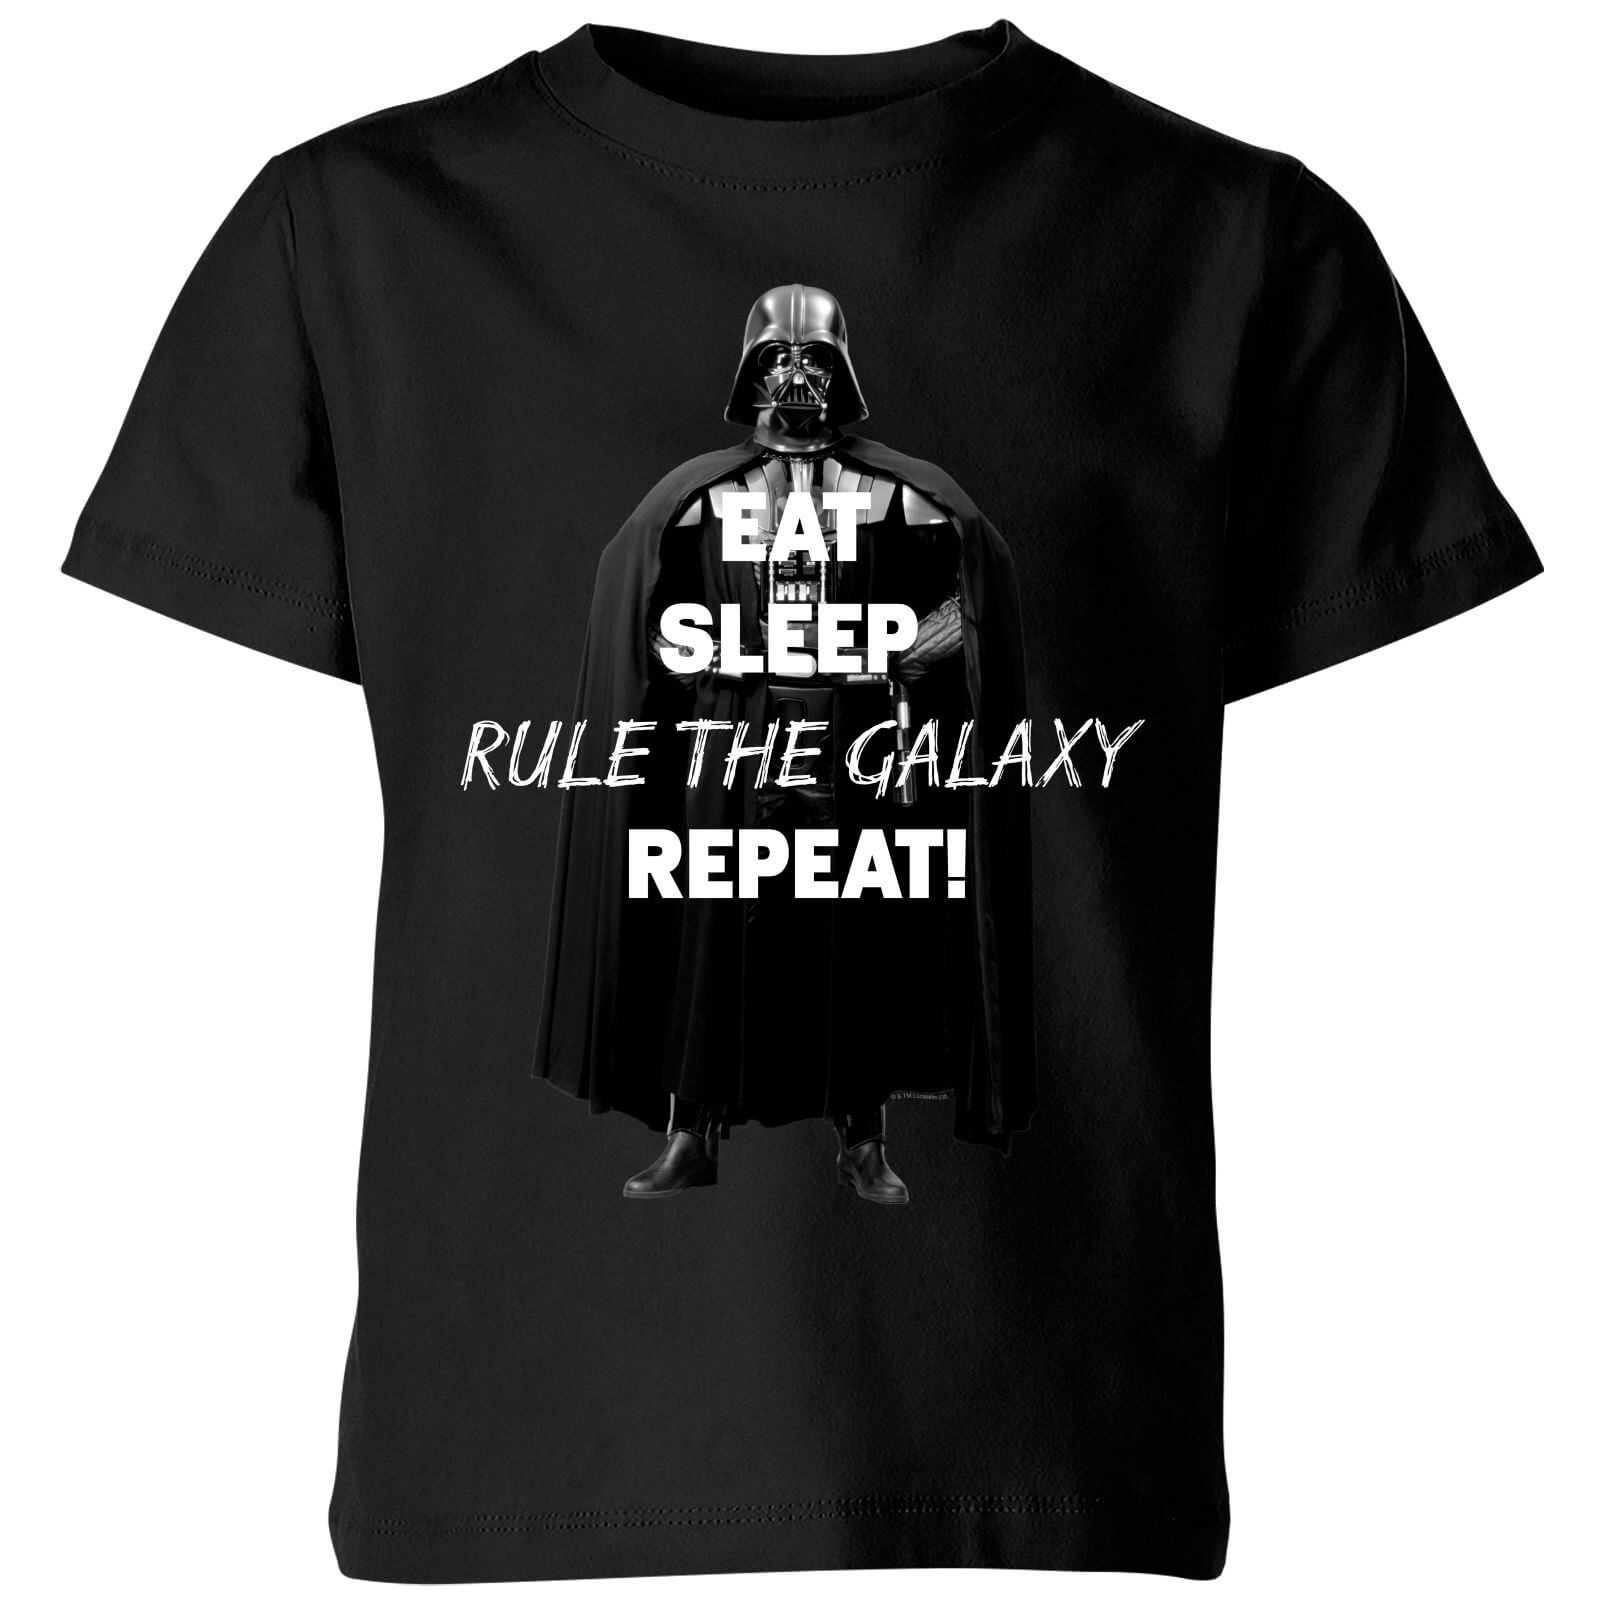 Star Wars Eat Sleep Rule The Galaxy Repeat Kids' T-Shirt - Black - 5-6 Years - Black